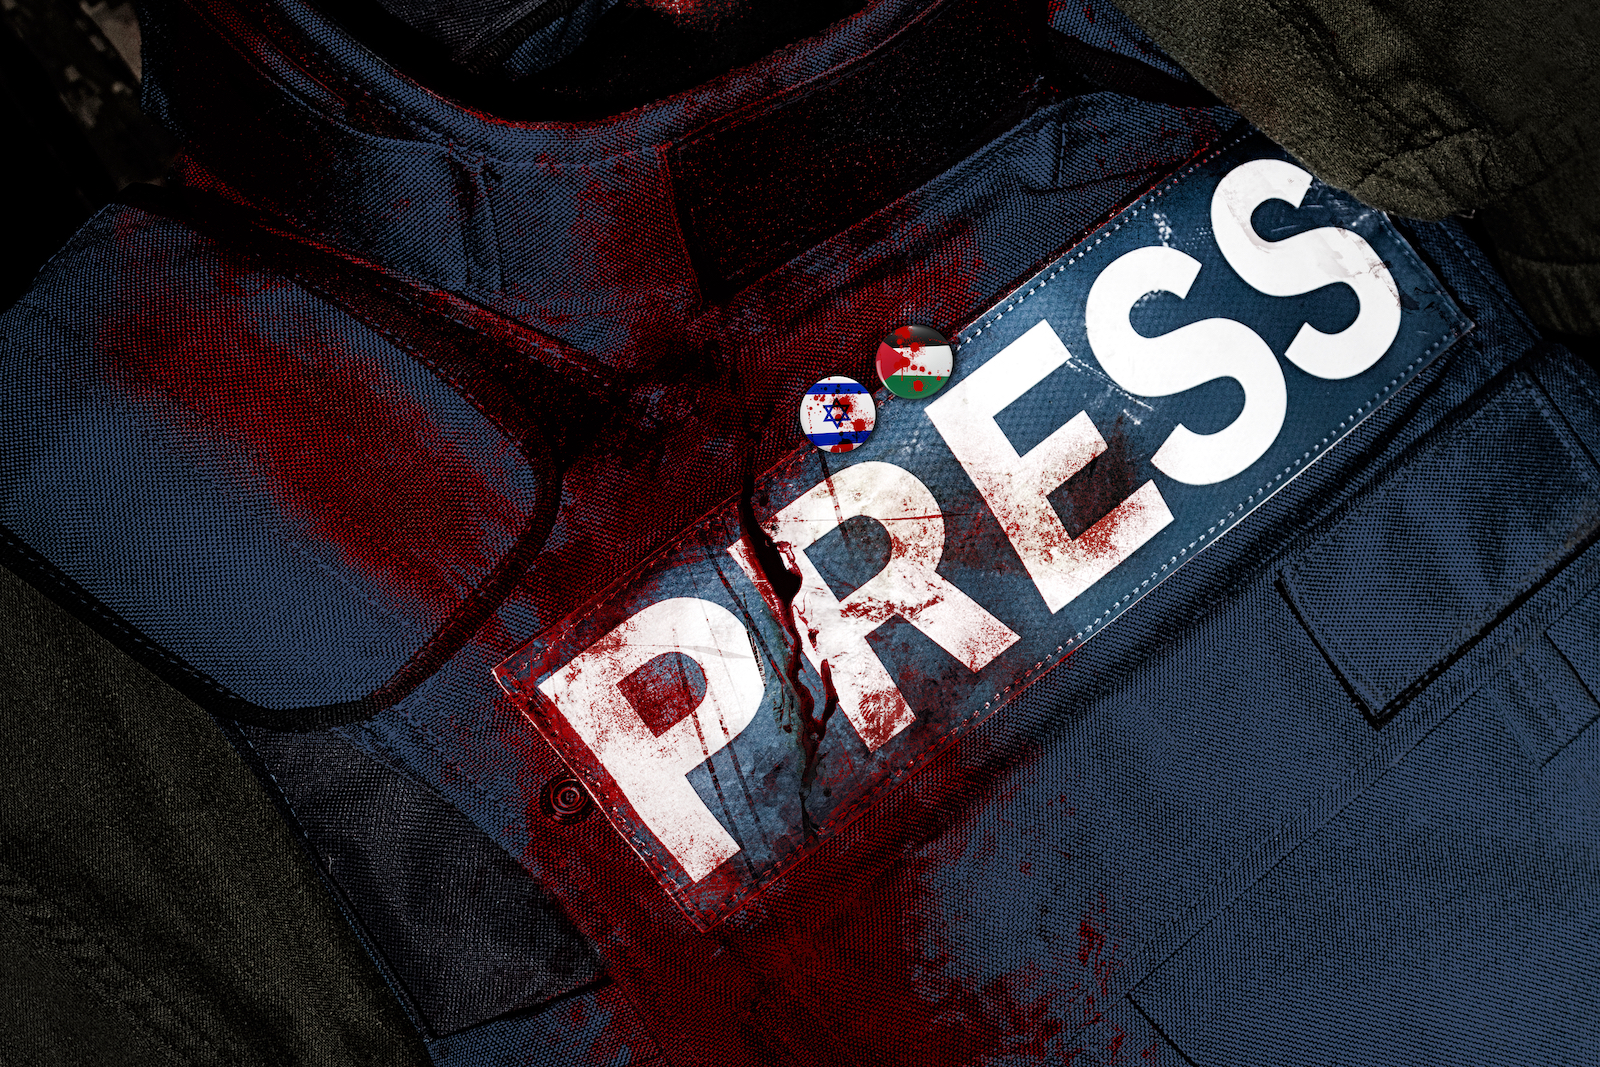 Press bulletproof vest